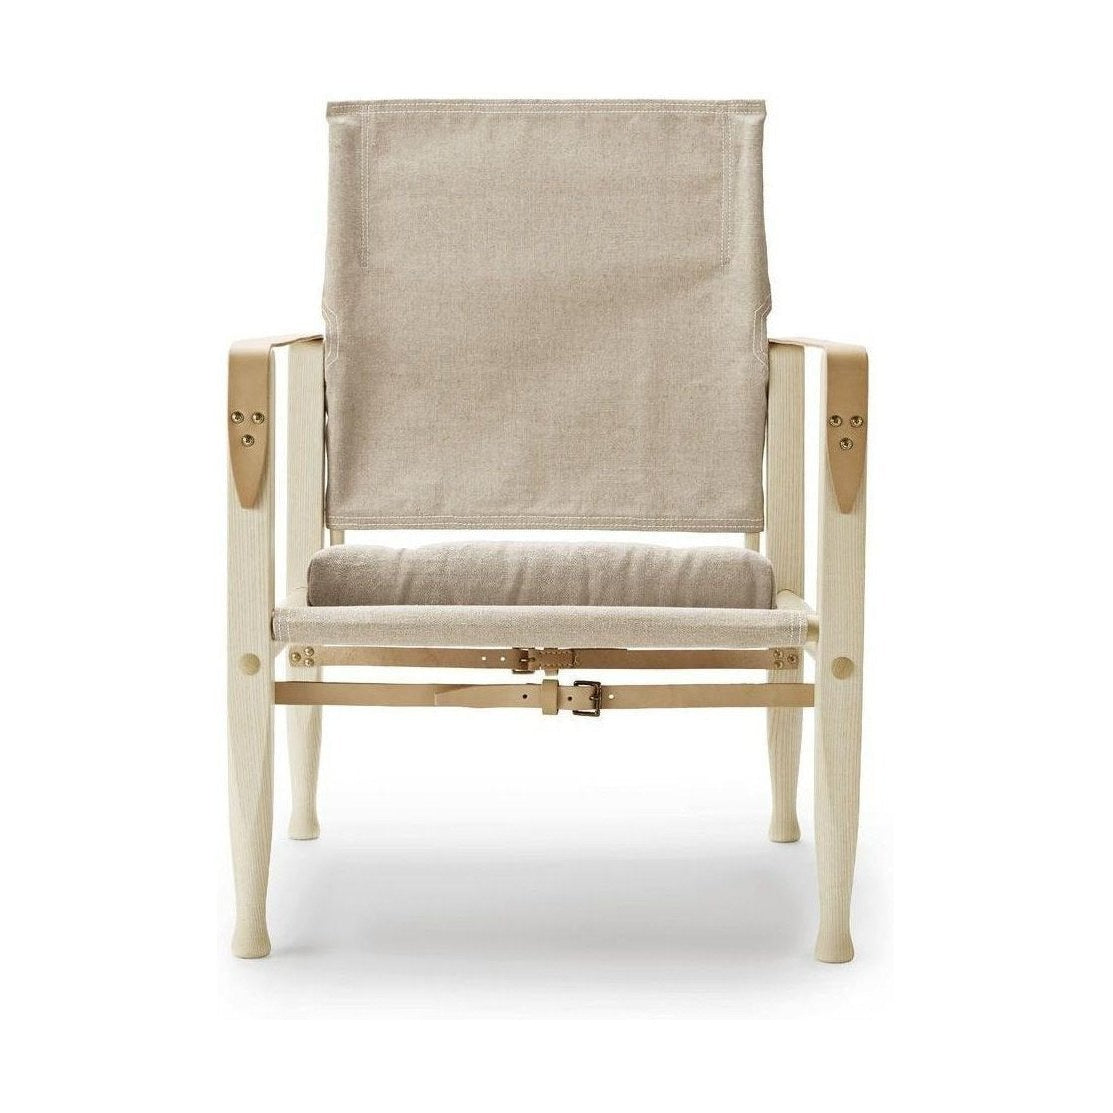 Carl Hansen KK47000 Safari -stoel, geoliede as/natuurlijk